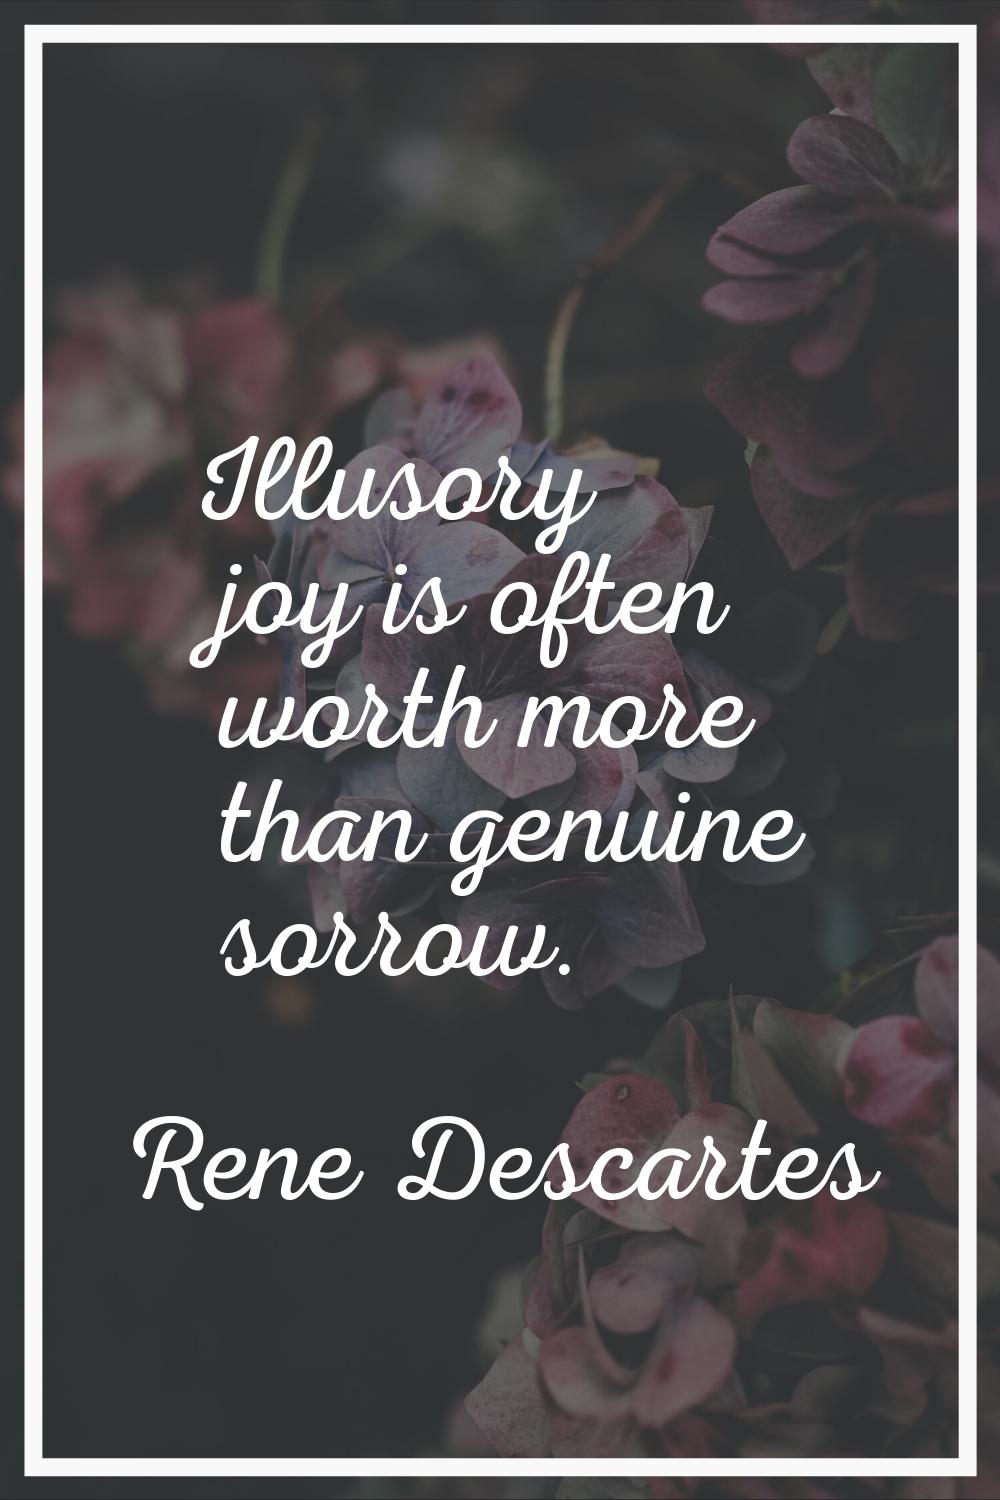 Illusory joy is often worth more than genuine sorrow.